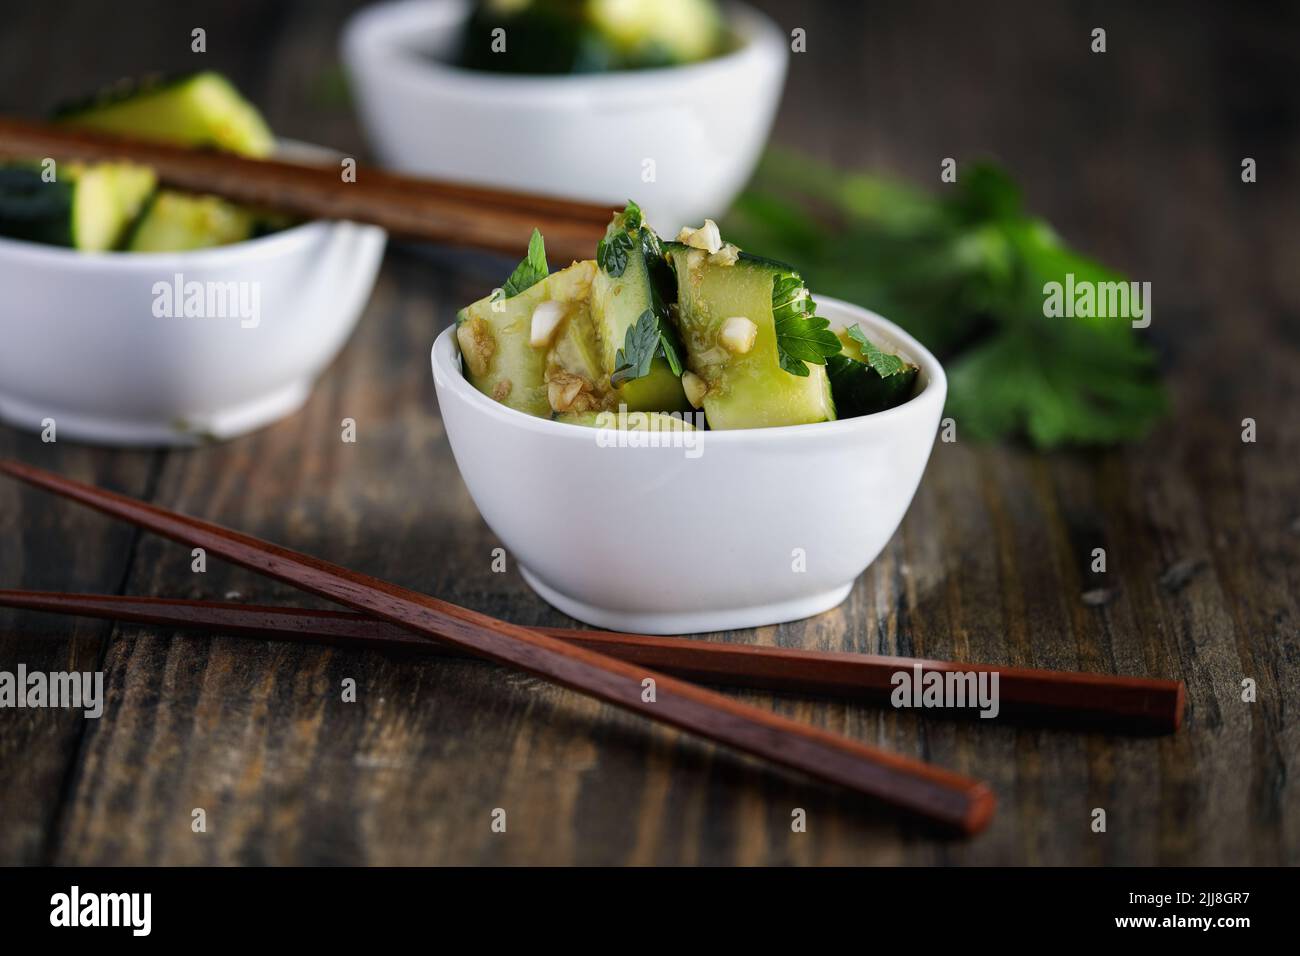 Pai Huang Gua frío, ensalada de pepino triturado chino. Elaborado con ajo, jengibre, aceite de sésamo, salsa de soja y adornado con hojas frescas de cilantro. Extre Foto de stock